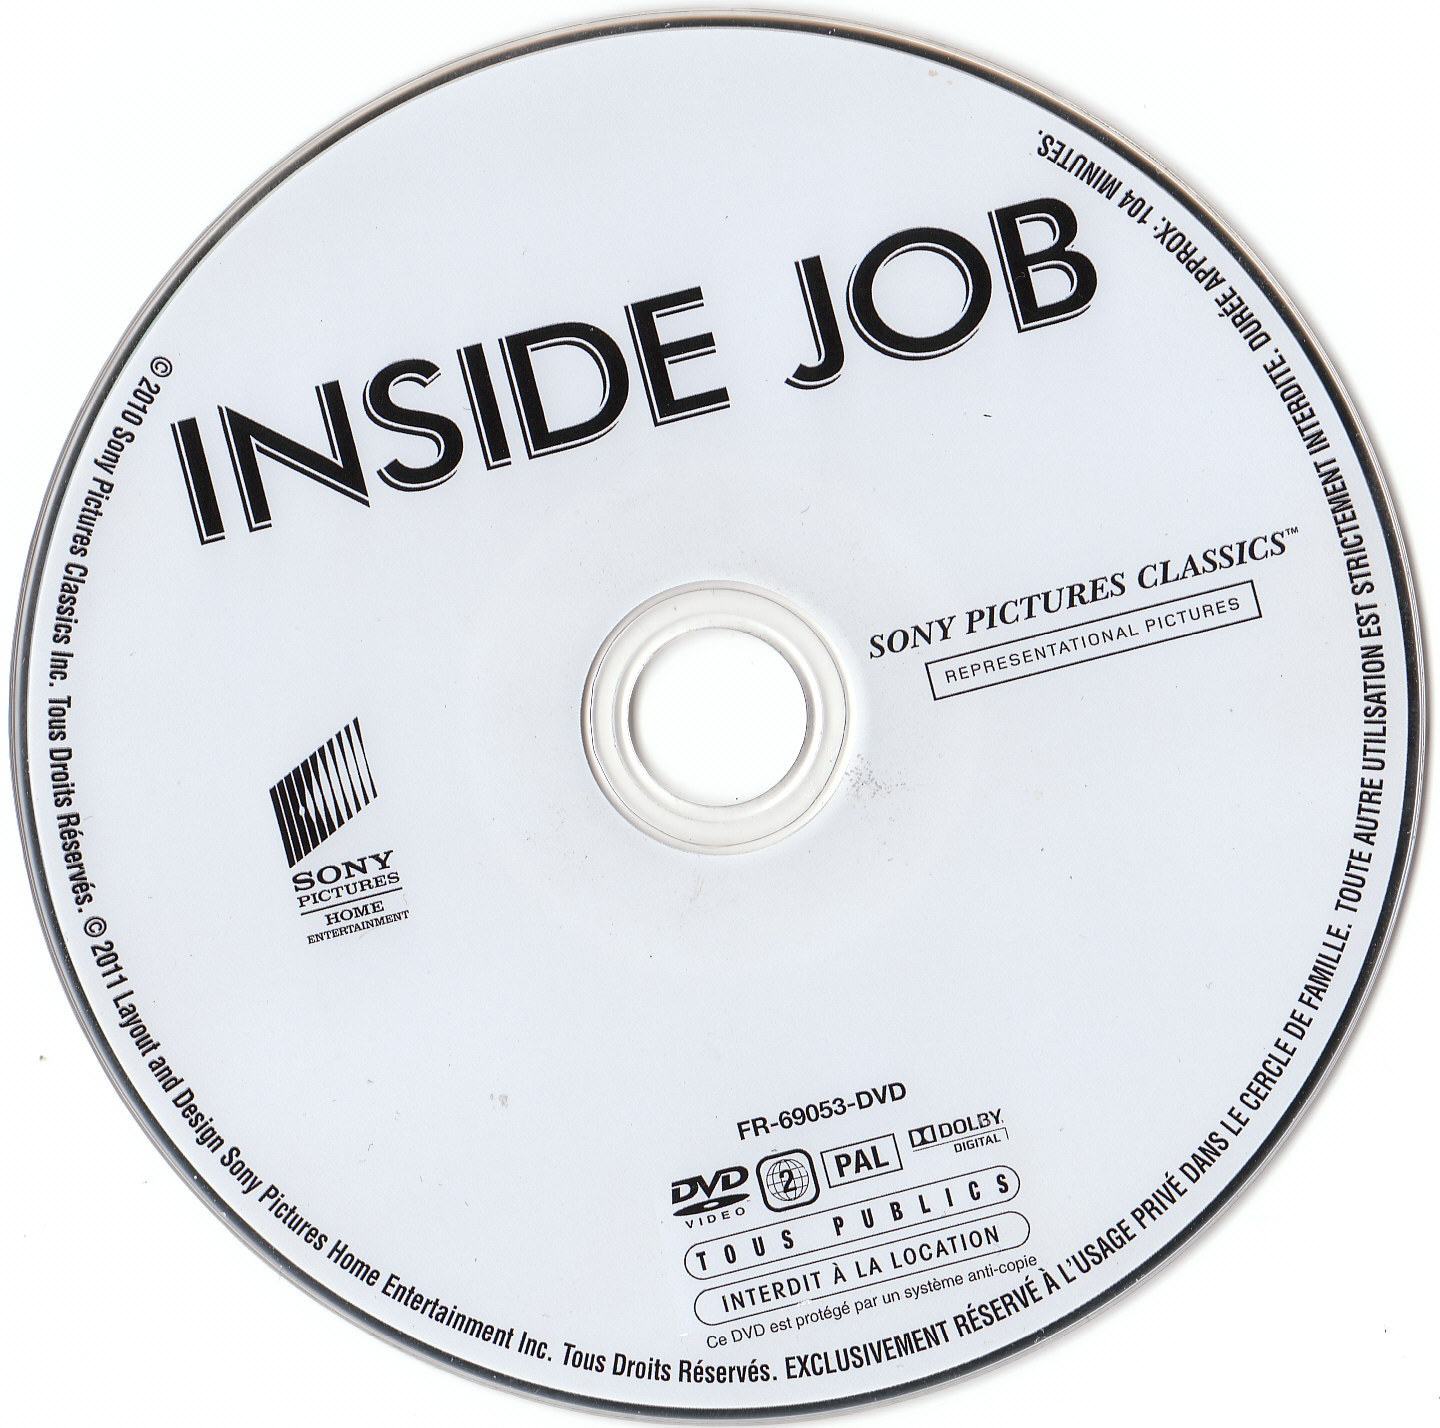 Inside job (doc)